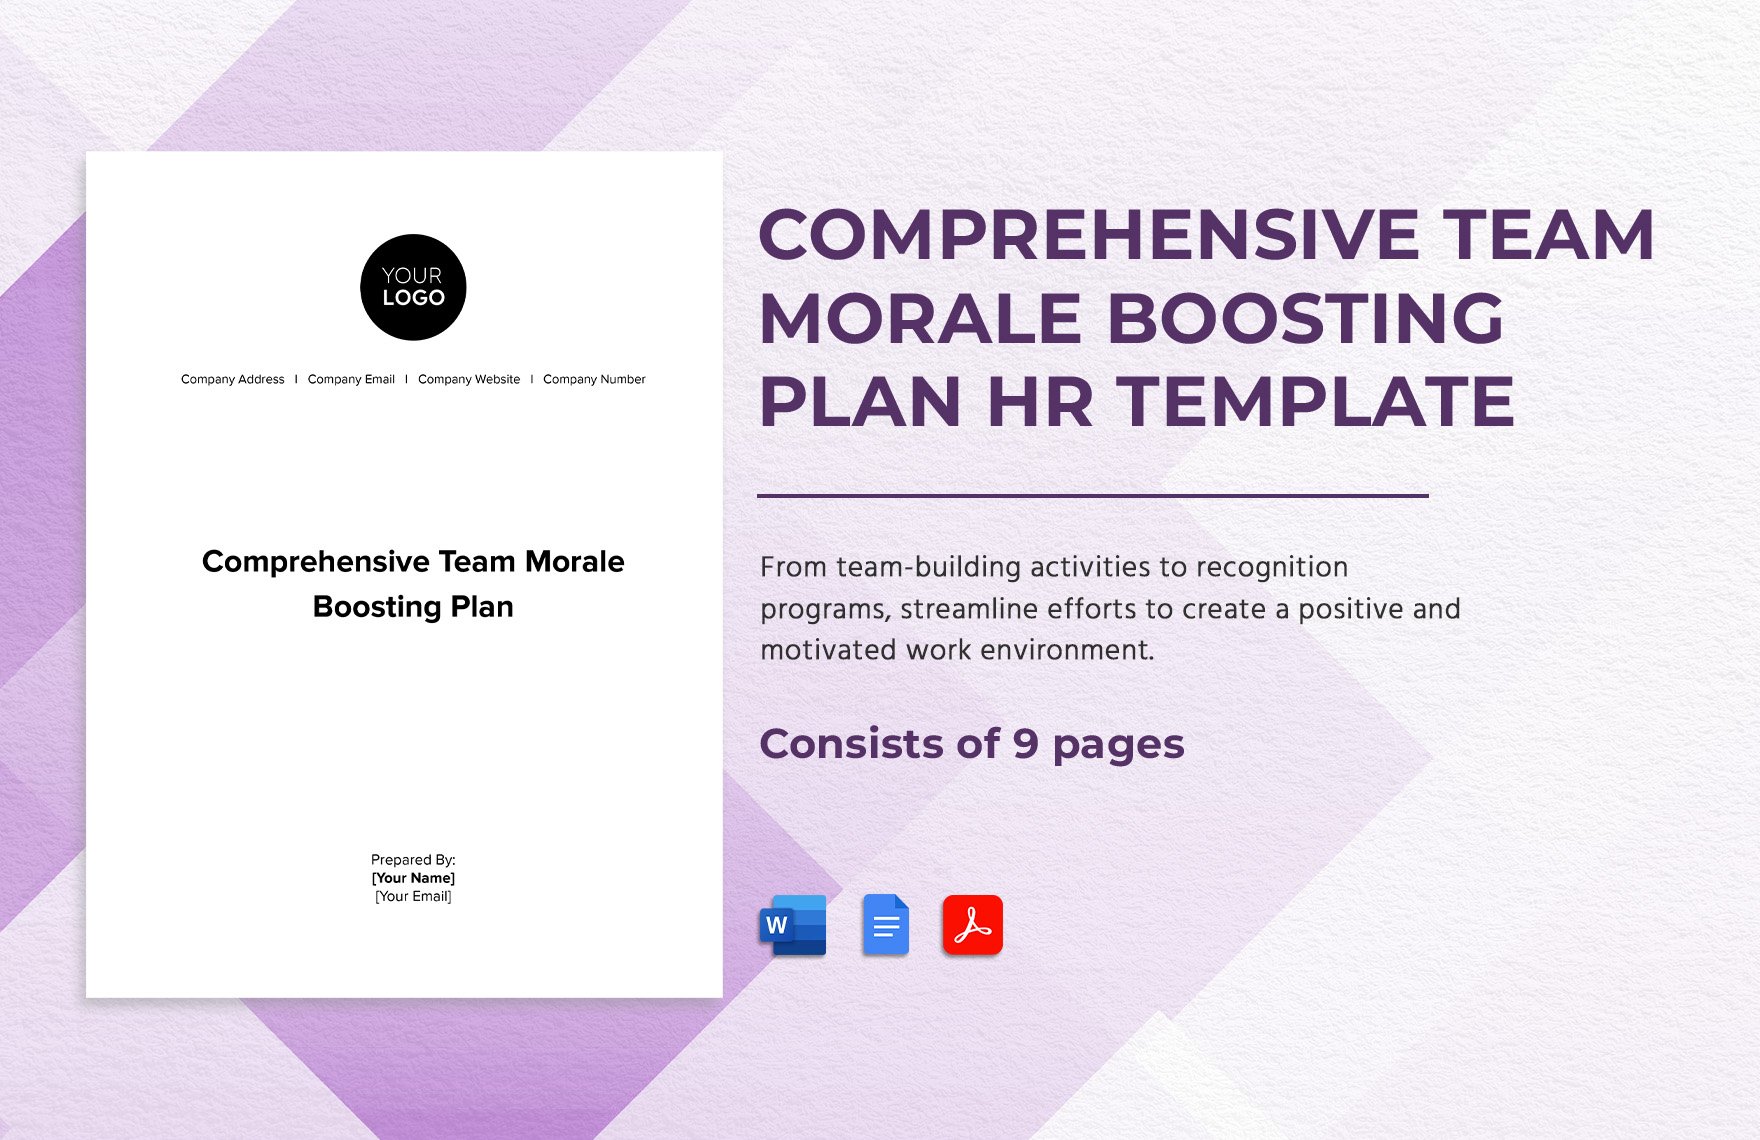 Comprehensive Team Morale Boosting Plan HR Template